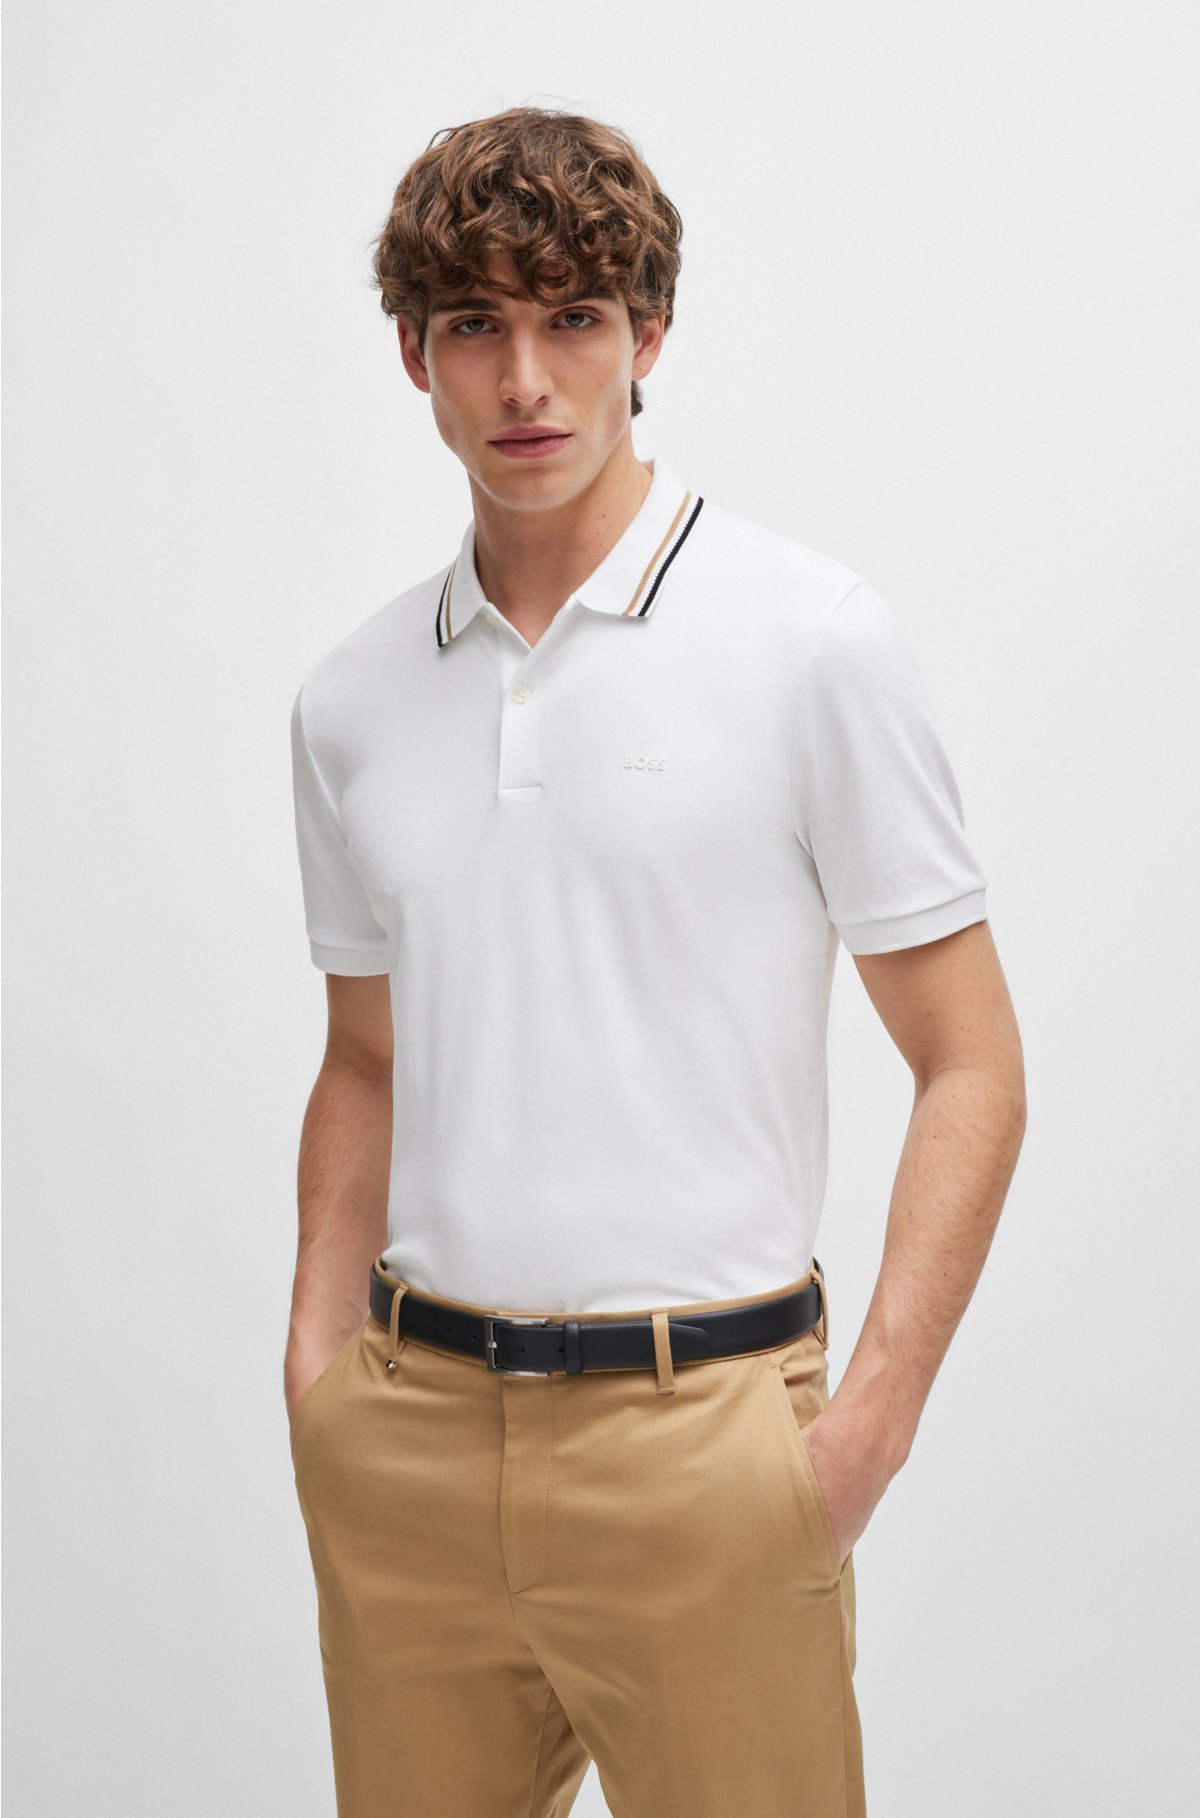 Navy Stand Up Collar Cotton Polo Shirt, XL - 44